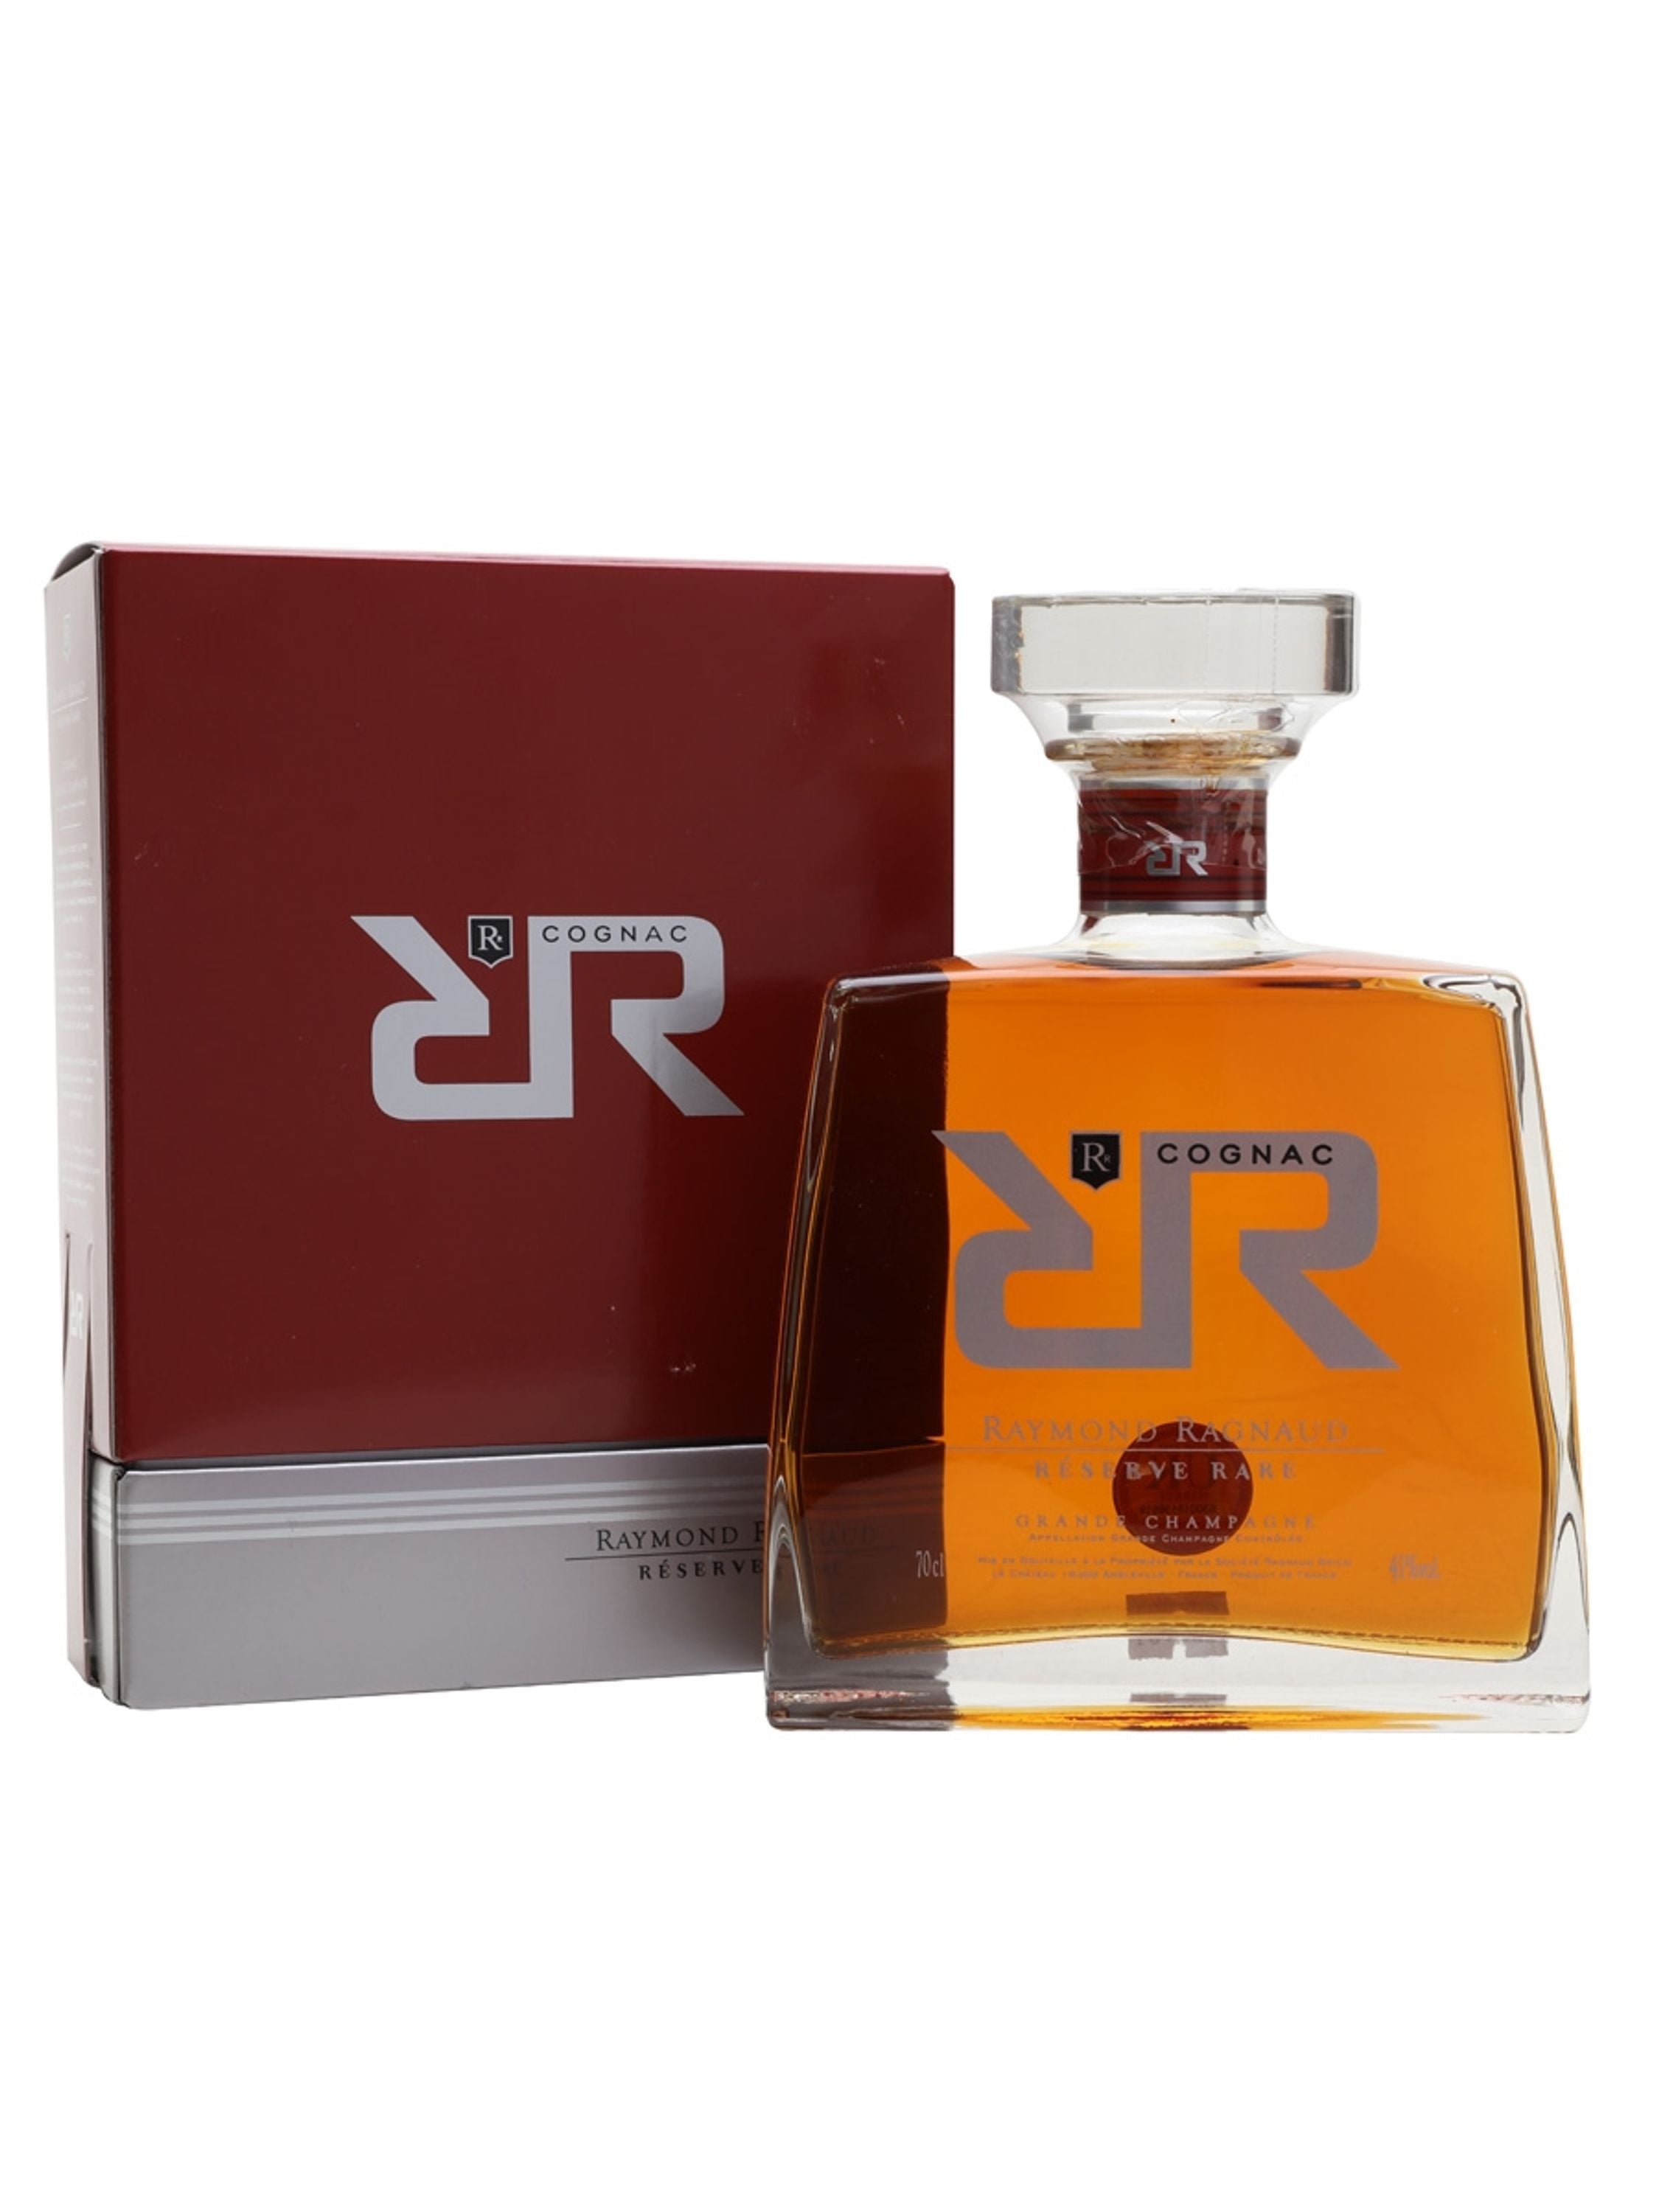 Raymond Ragnaud Reserve Rare 0.7l, alc. 41% by volume, Cognac France